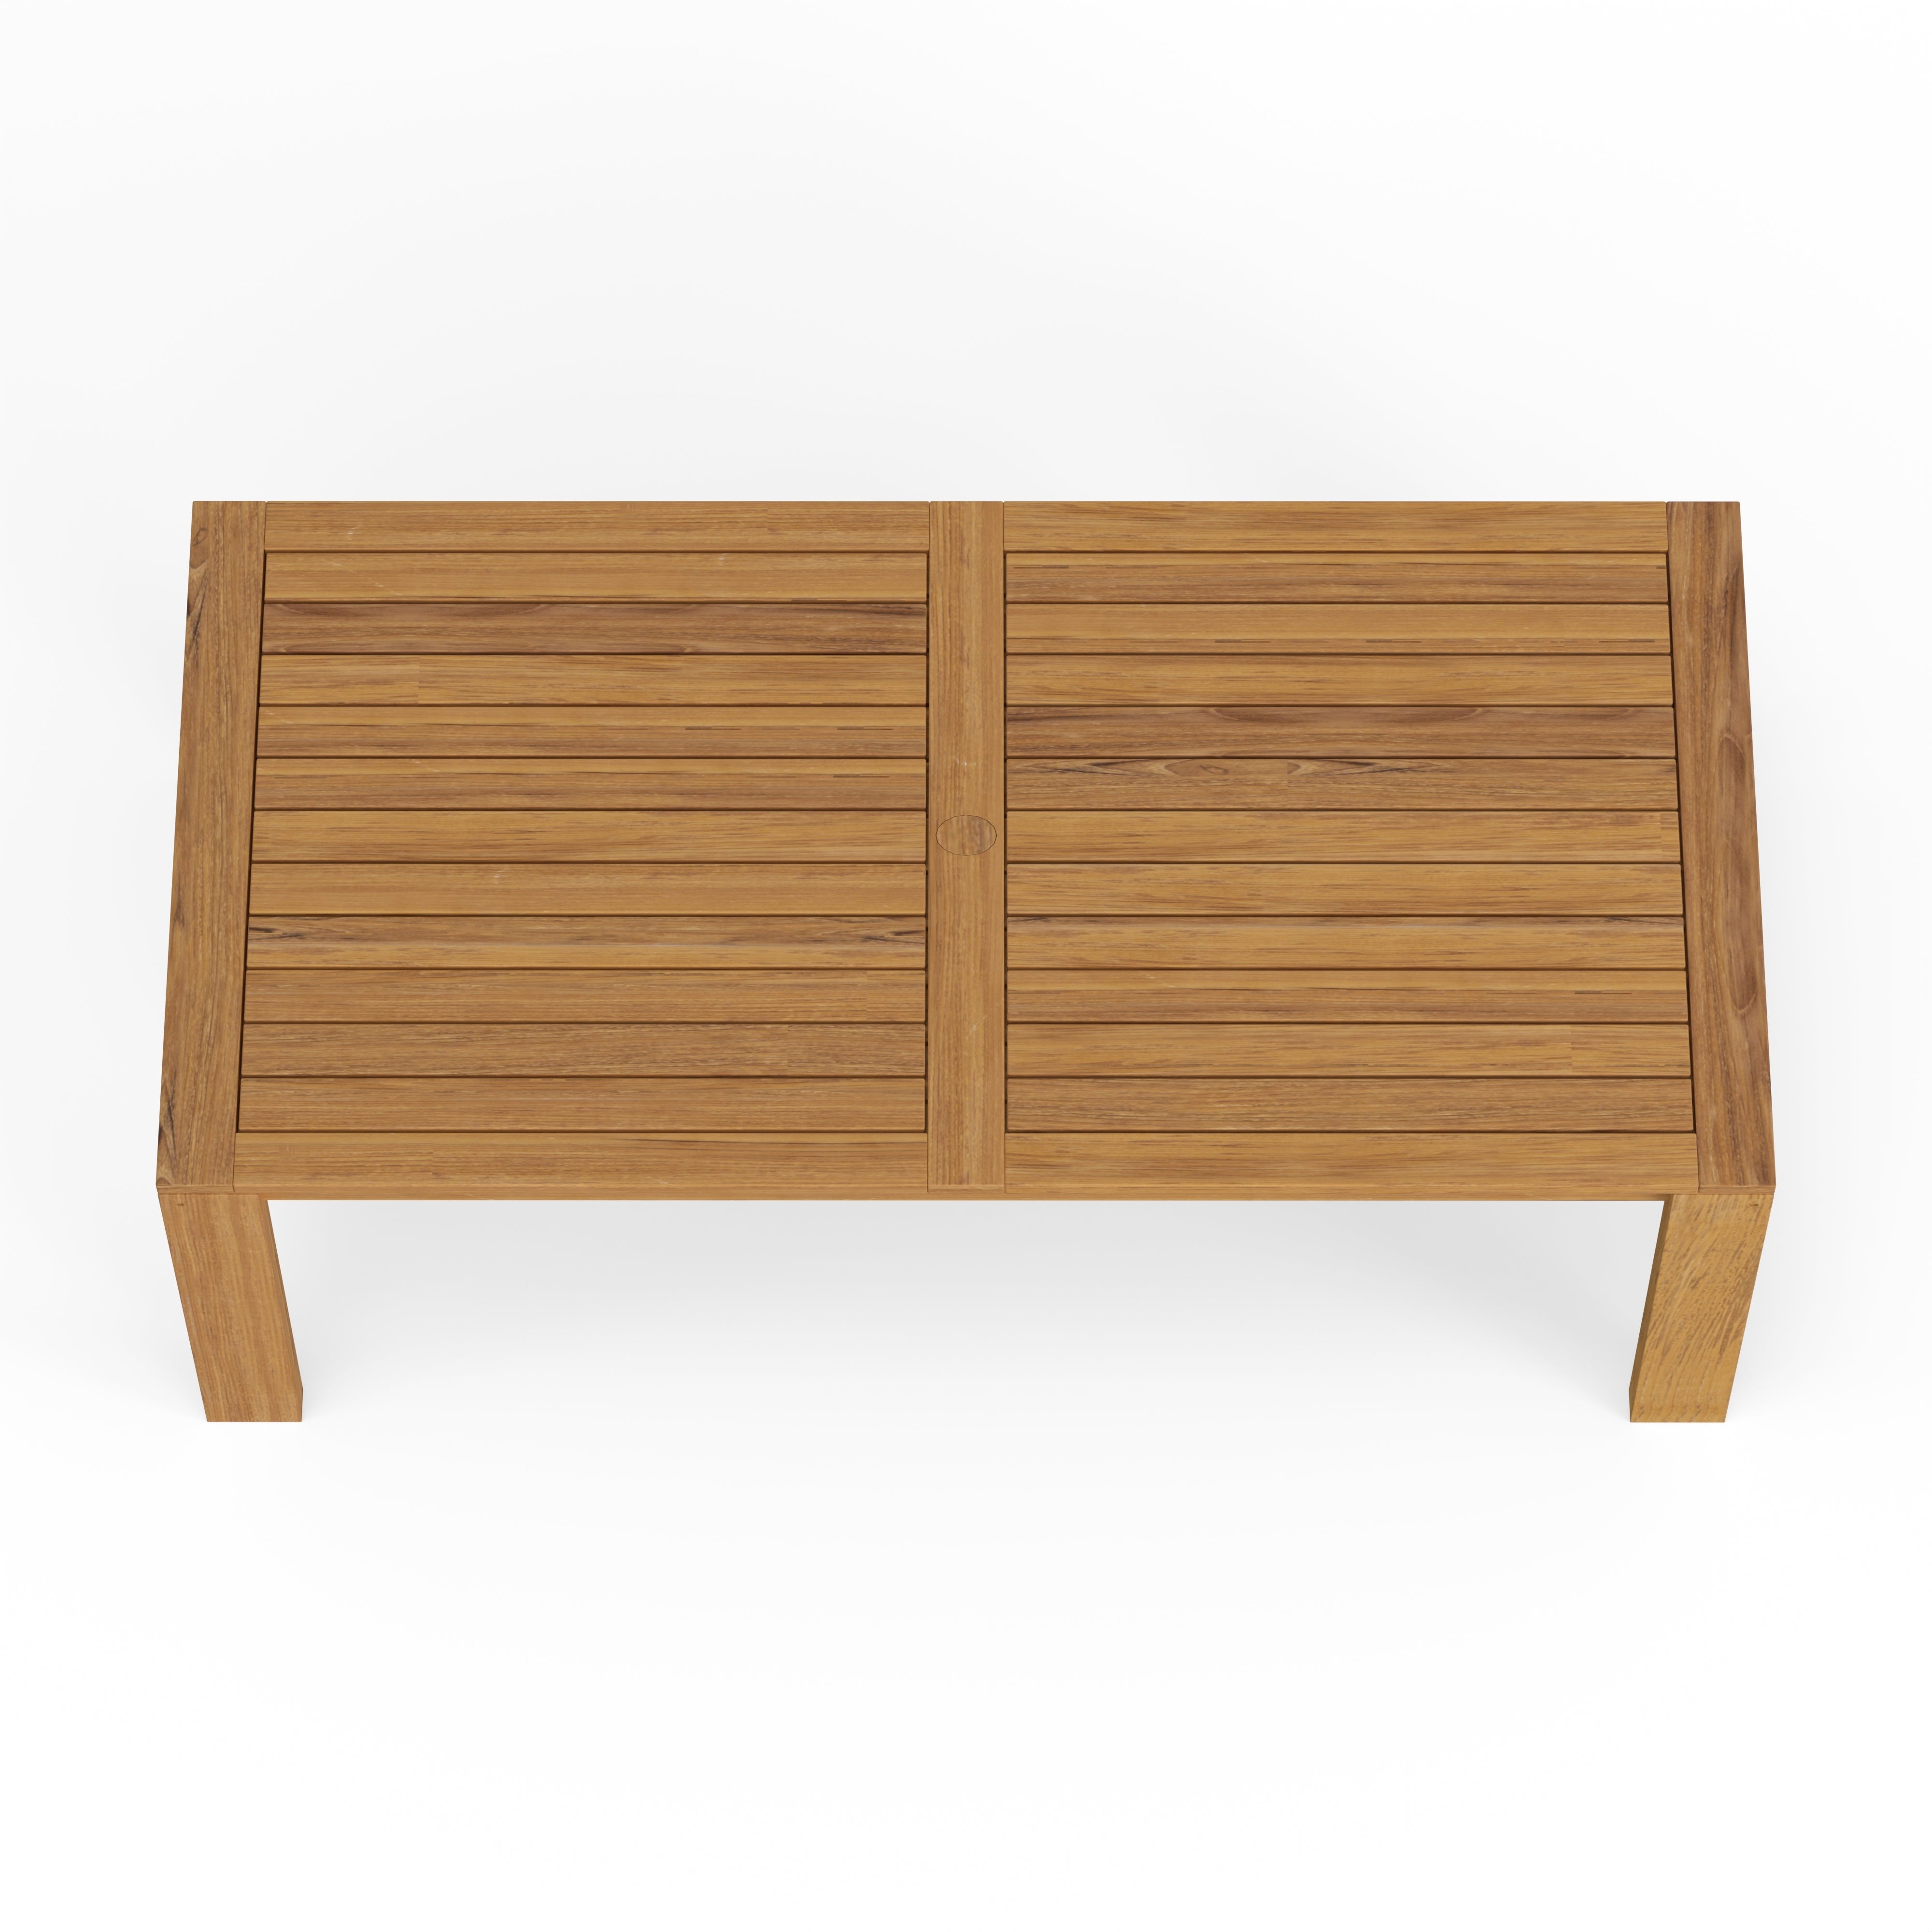 Modern Wood Outdoor Dining SetHigh Quality Luxury Teak Dining Table Set